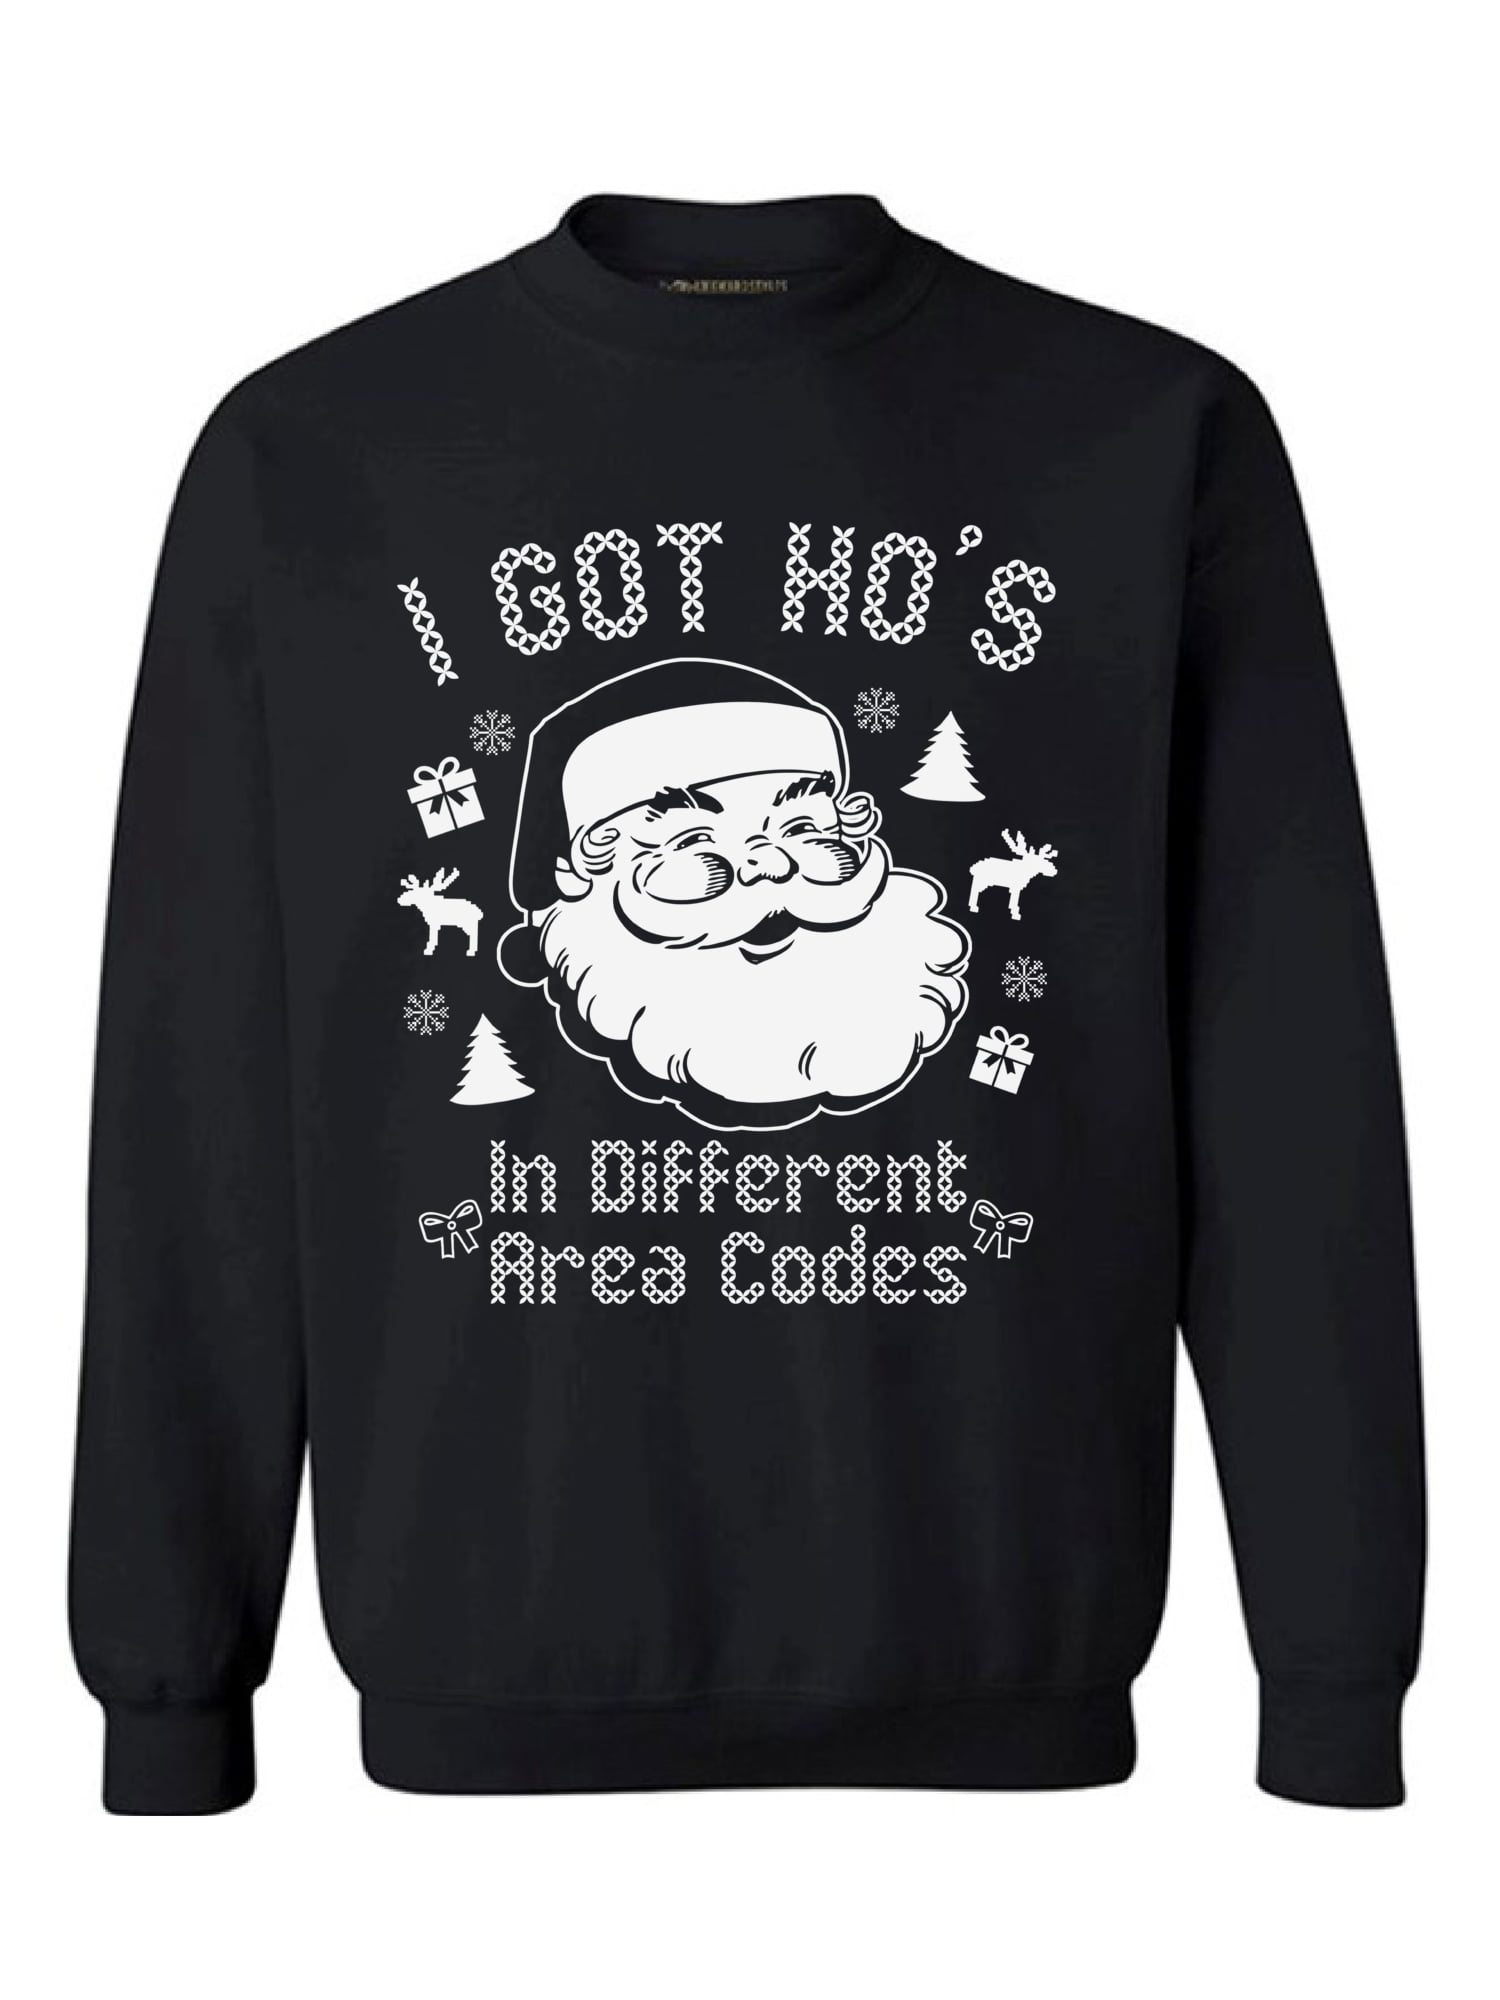 Ugly Christmas Sweater - Funny Santa Sweatshirt - Xmas Holiday